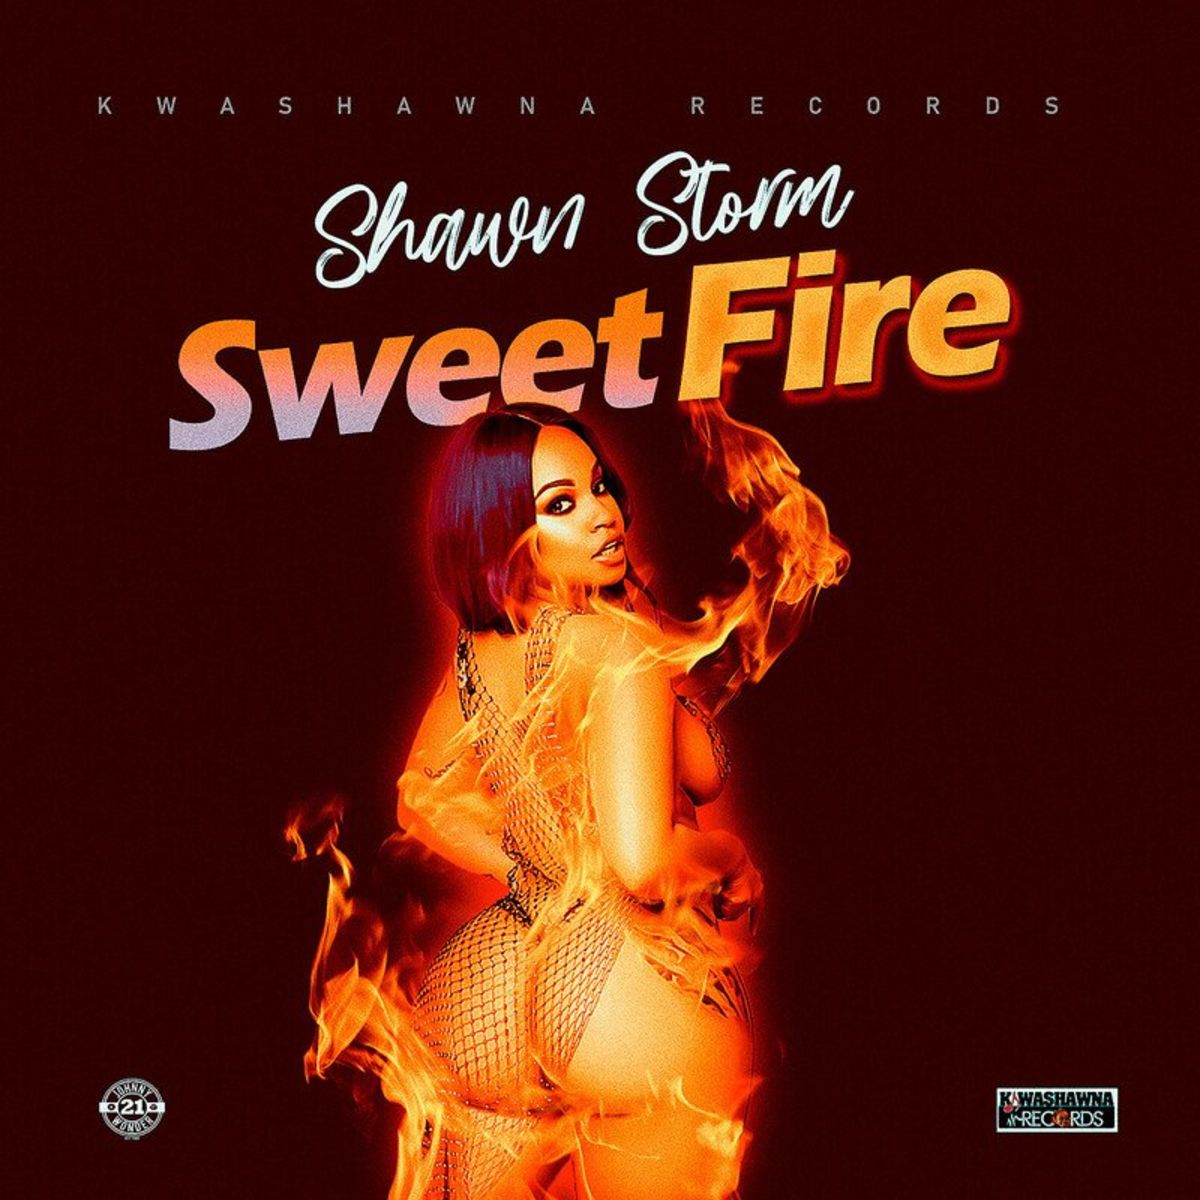 Shawn Storm Sweet Fire